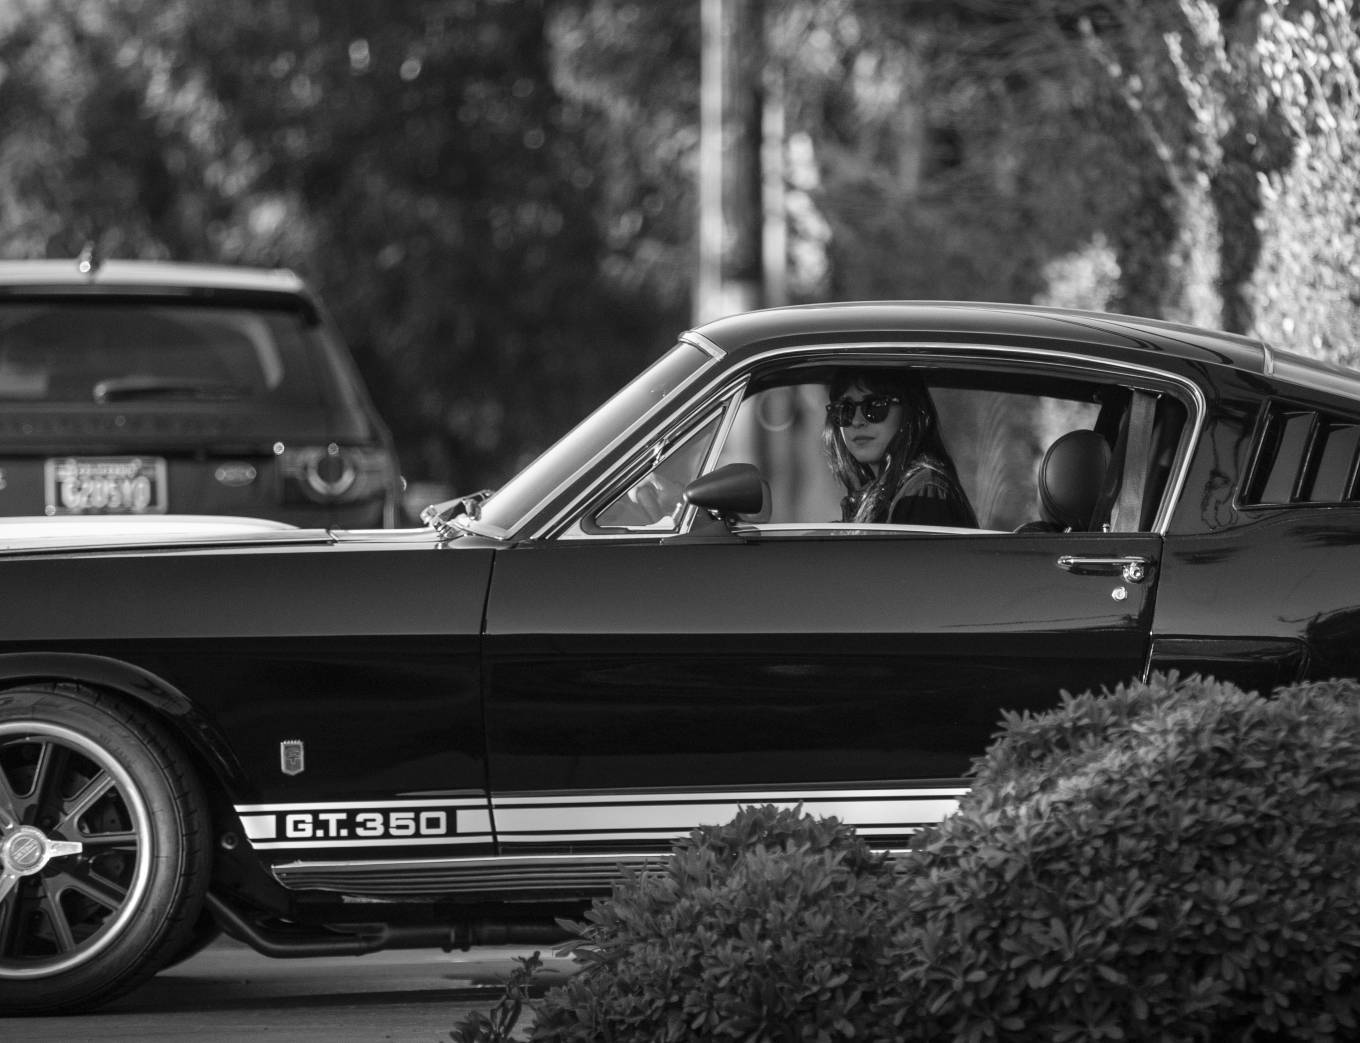 Dakota Johnson – Seen in her Mustang GT 350 in Malibu